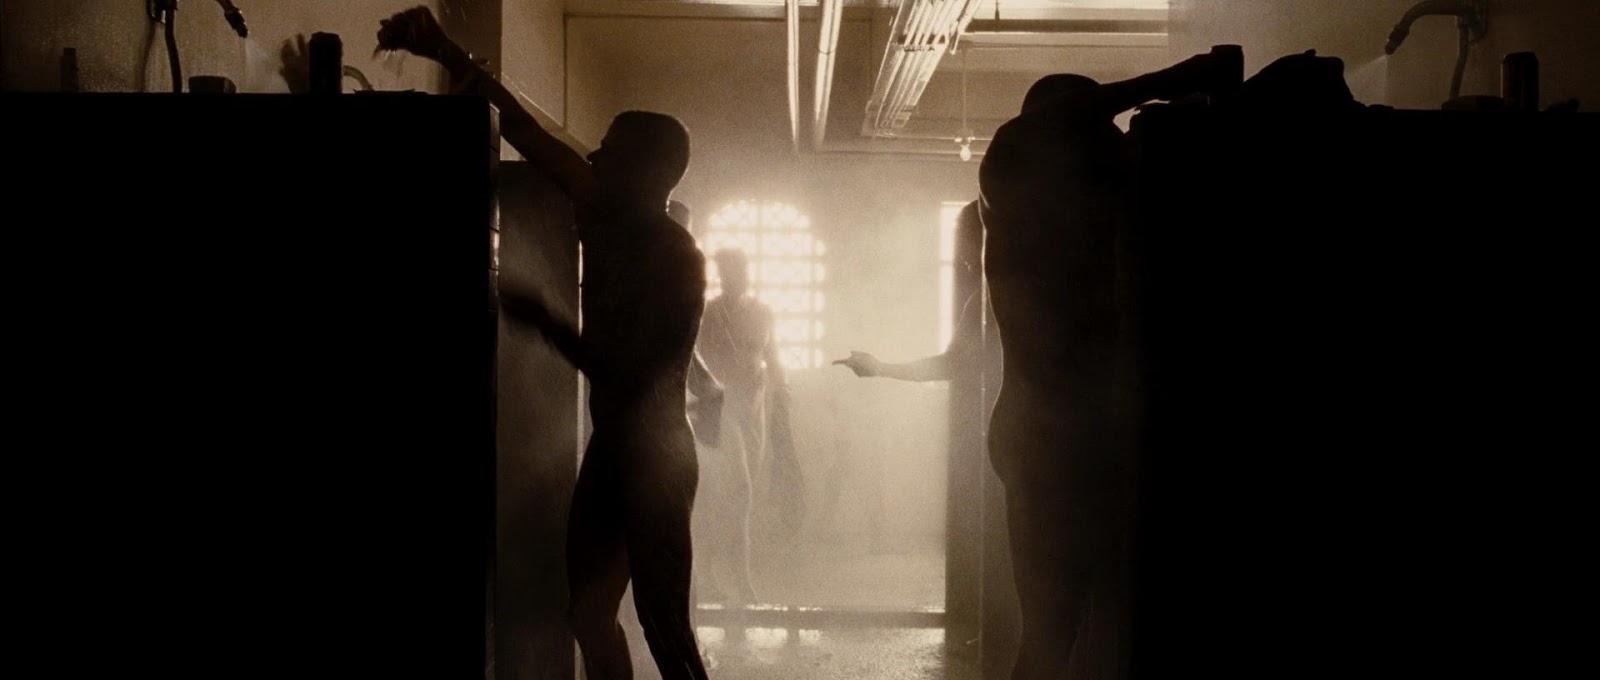 Jarhead Shower Scene Nude 83